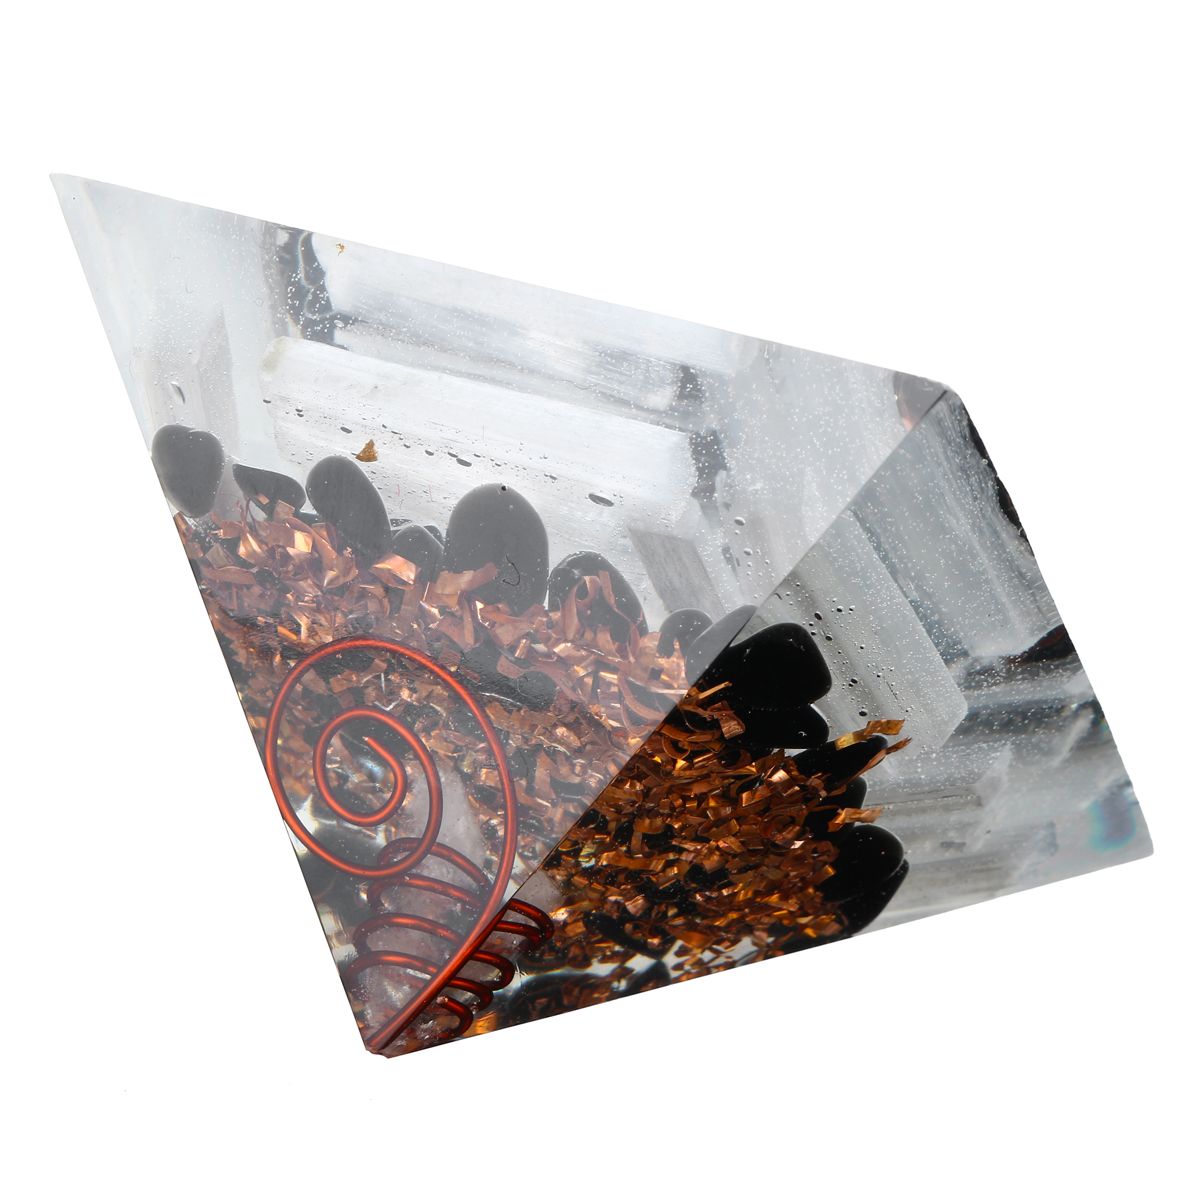 Pyramid-Crystals-Gemstone-Meditation-Yoga-Energy-Generator-Healing-Stone-Decor-1425128